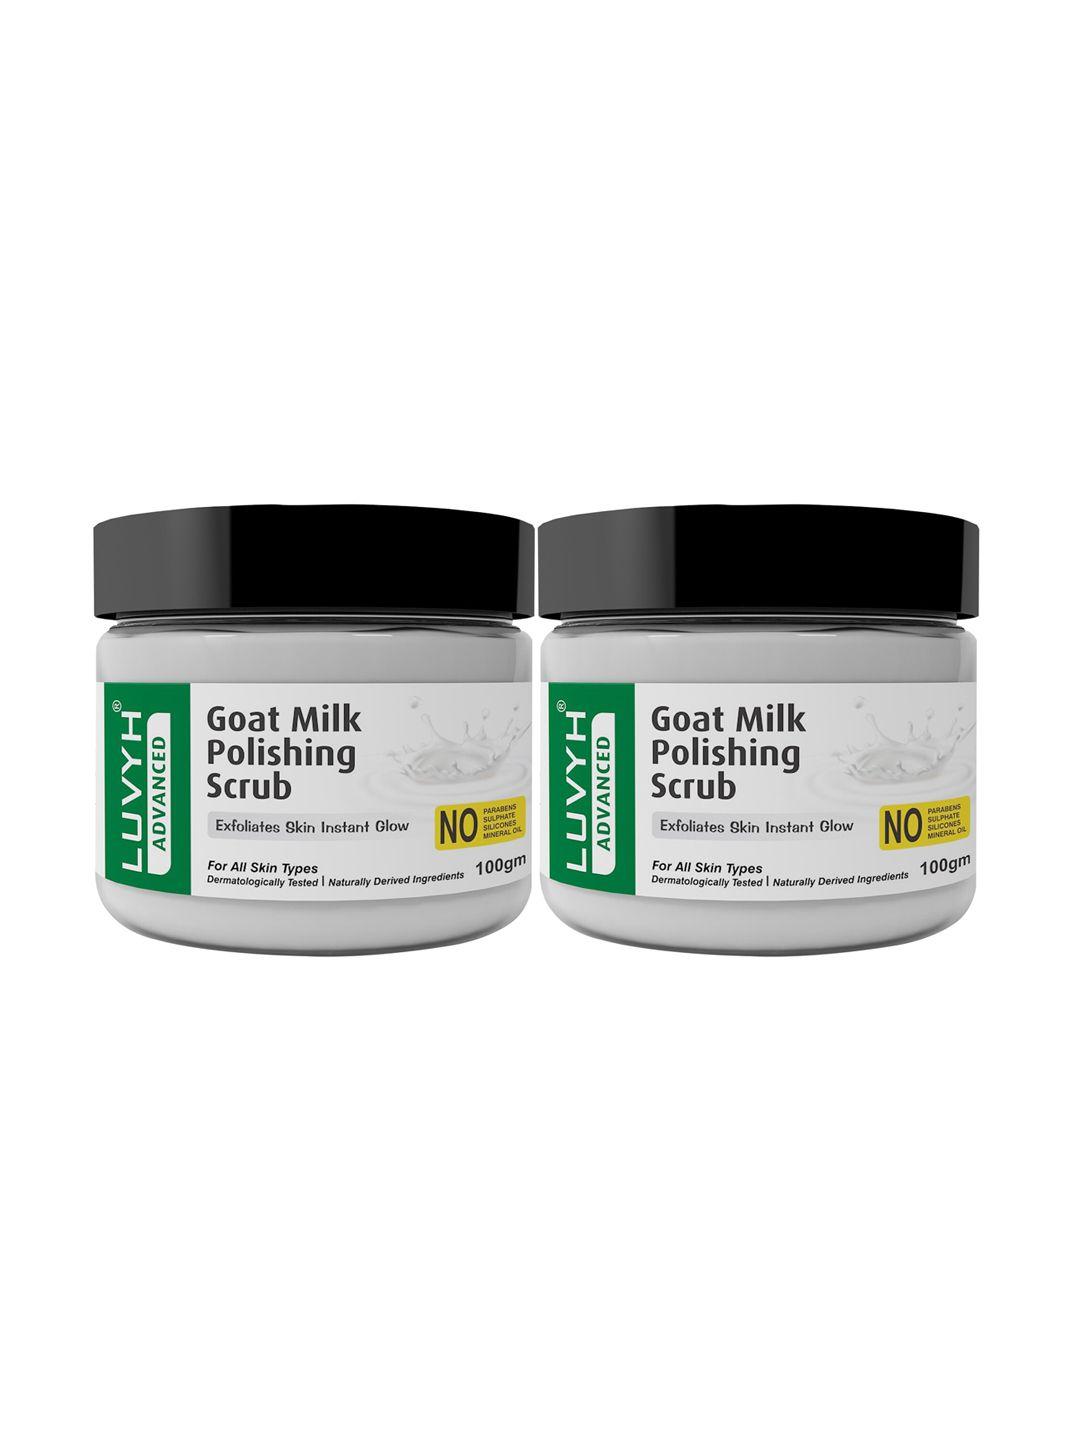 luvyh advanced set of 2 goat milk polishing scrubs for instant glow - 100 g each